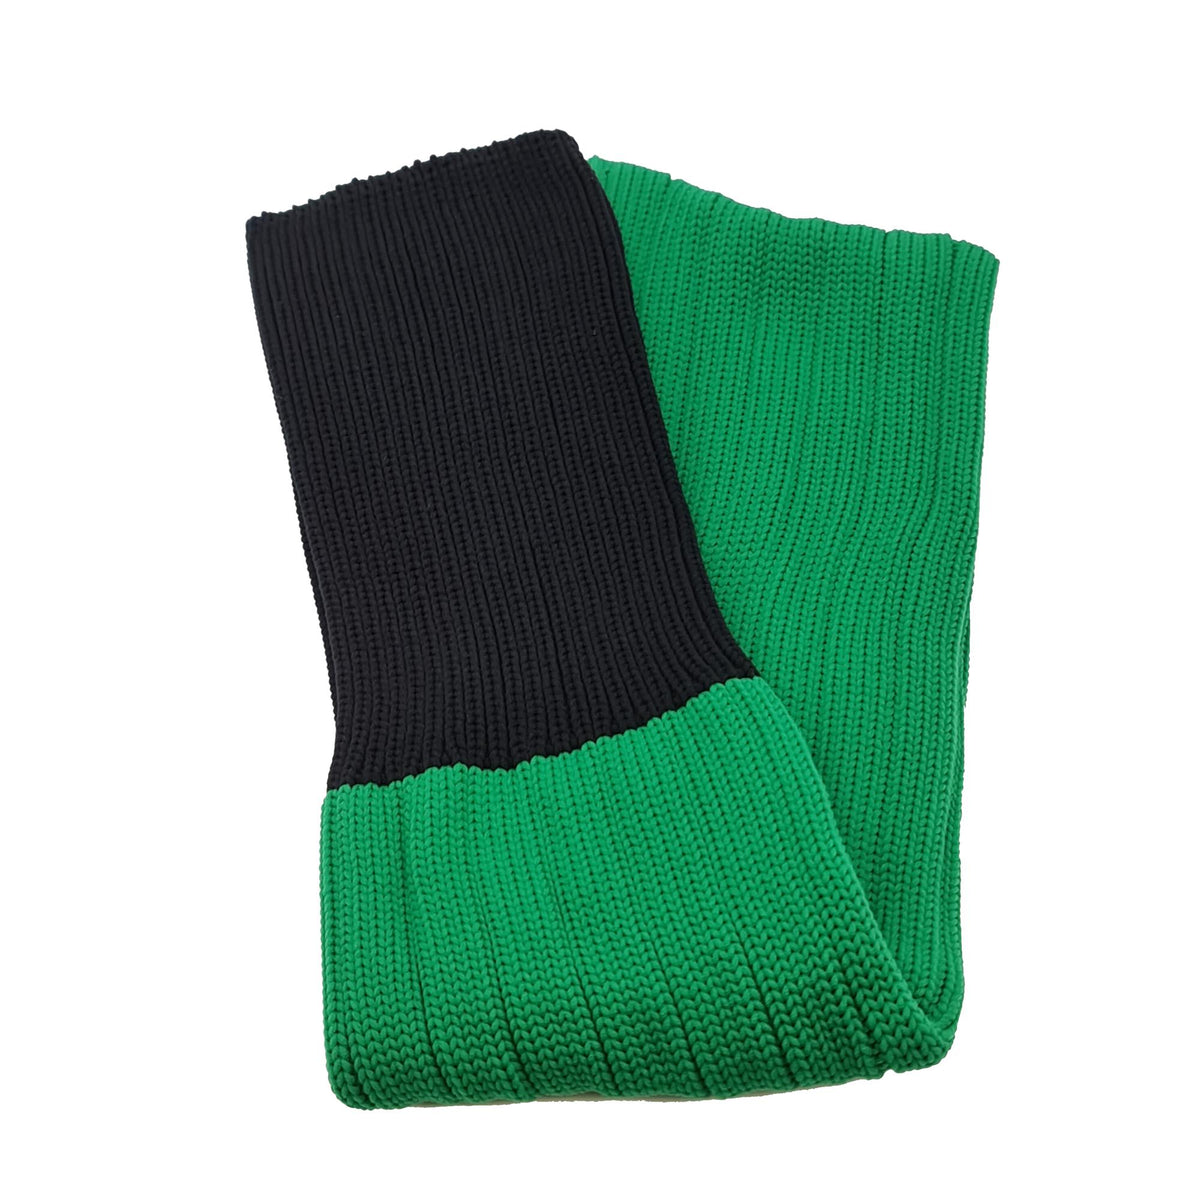 Contrast Top Football Rugby Premium Socks - Made In UK - BOTTLE GREEN/BLACK - MENS ( UK 6-8)